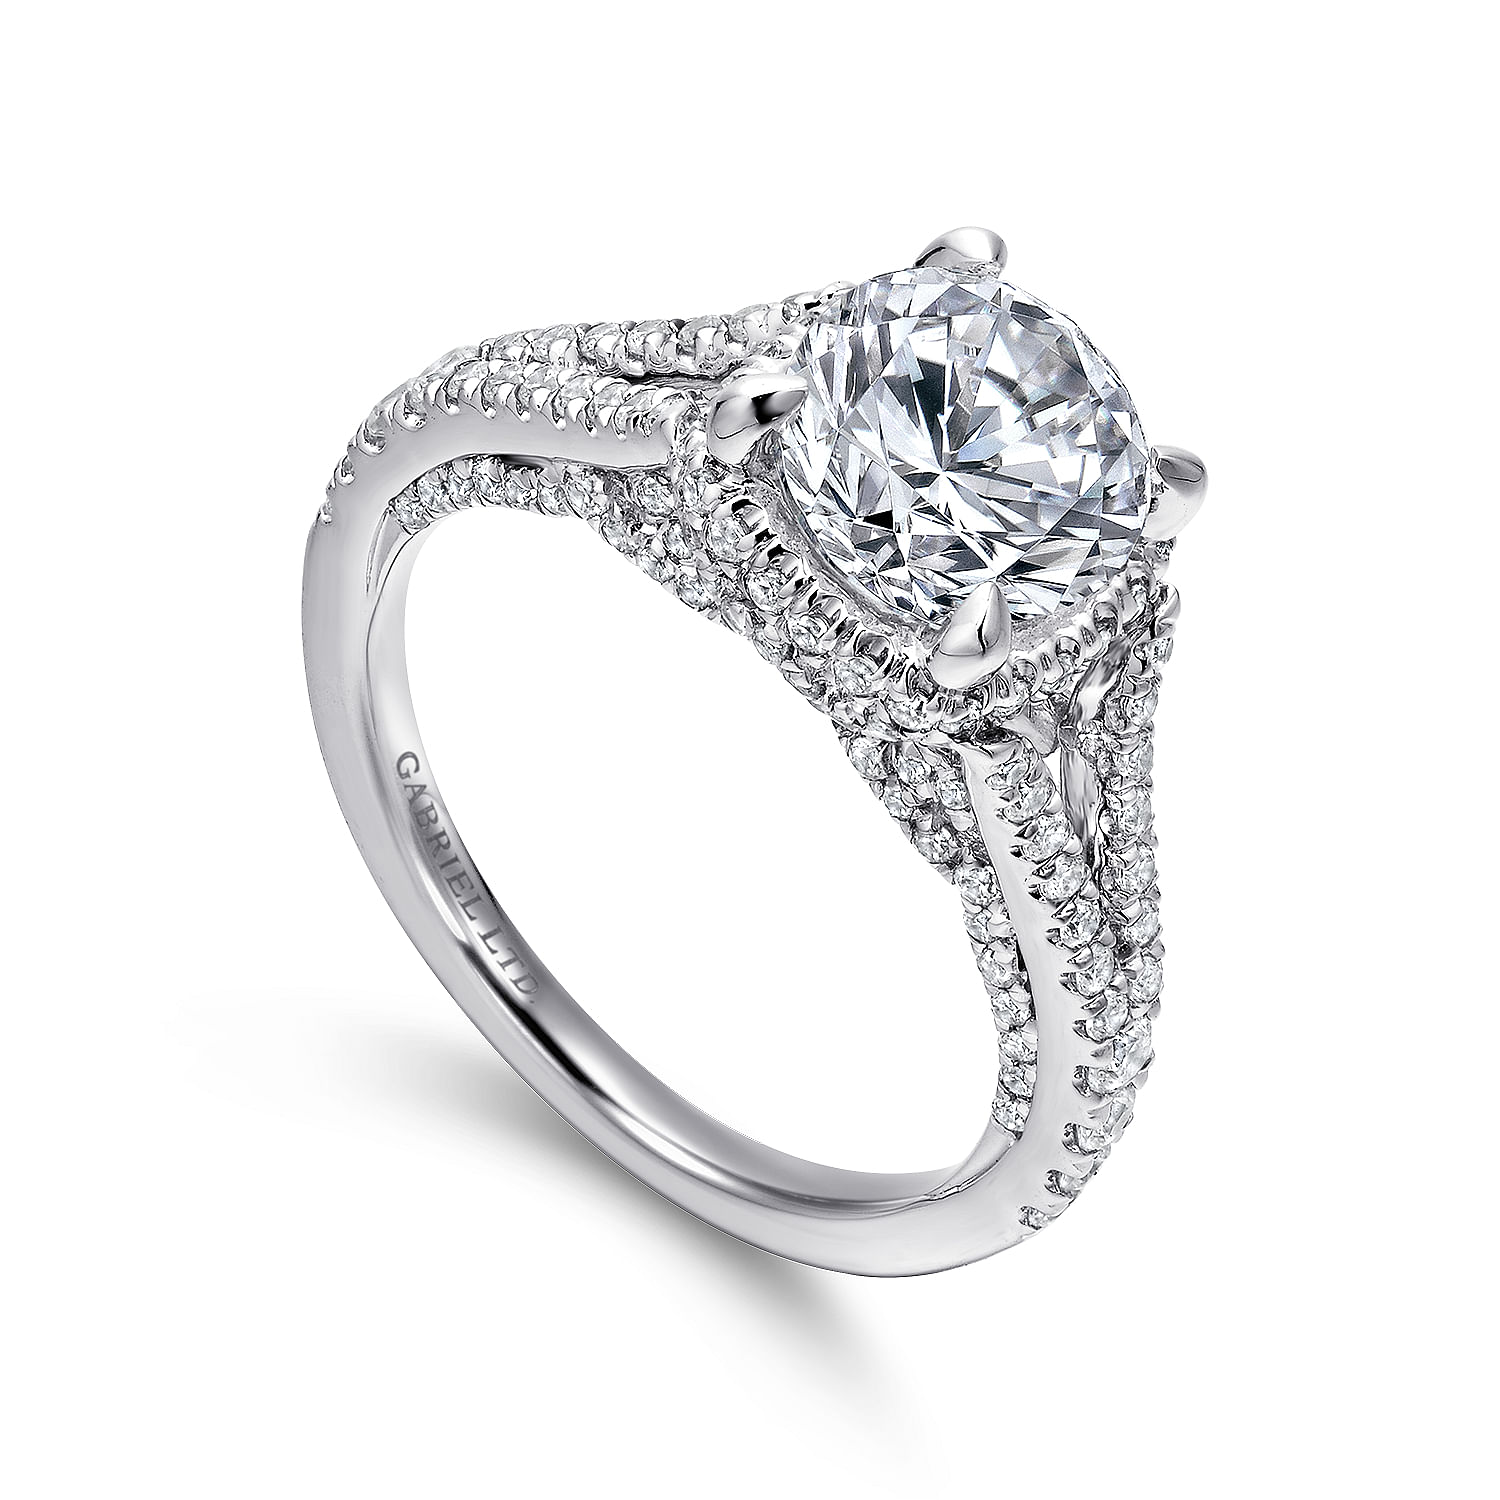 18K White Gold Hidden Halo Round 
Diamond Engagement Ring